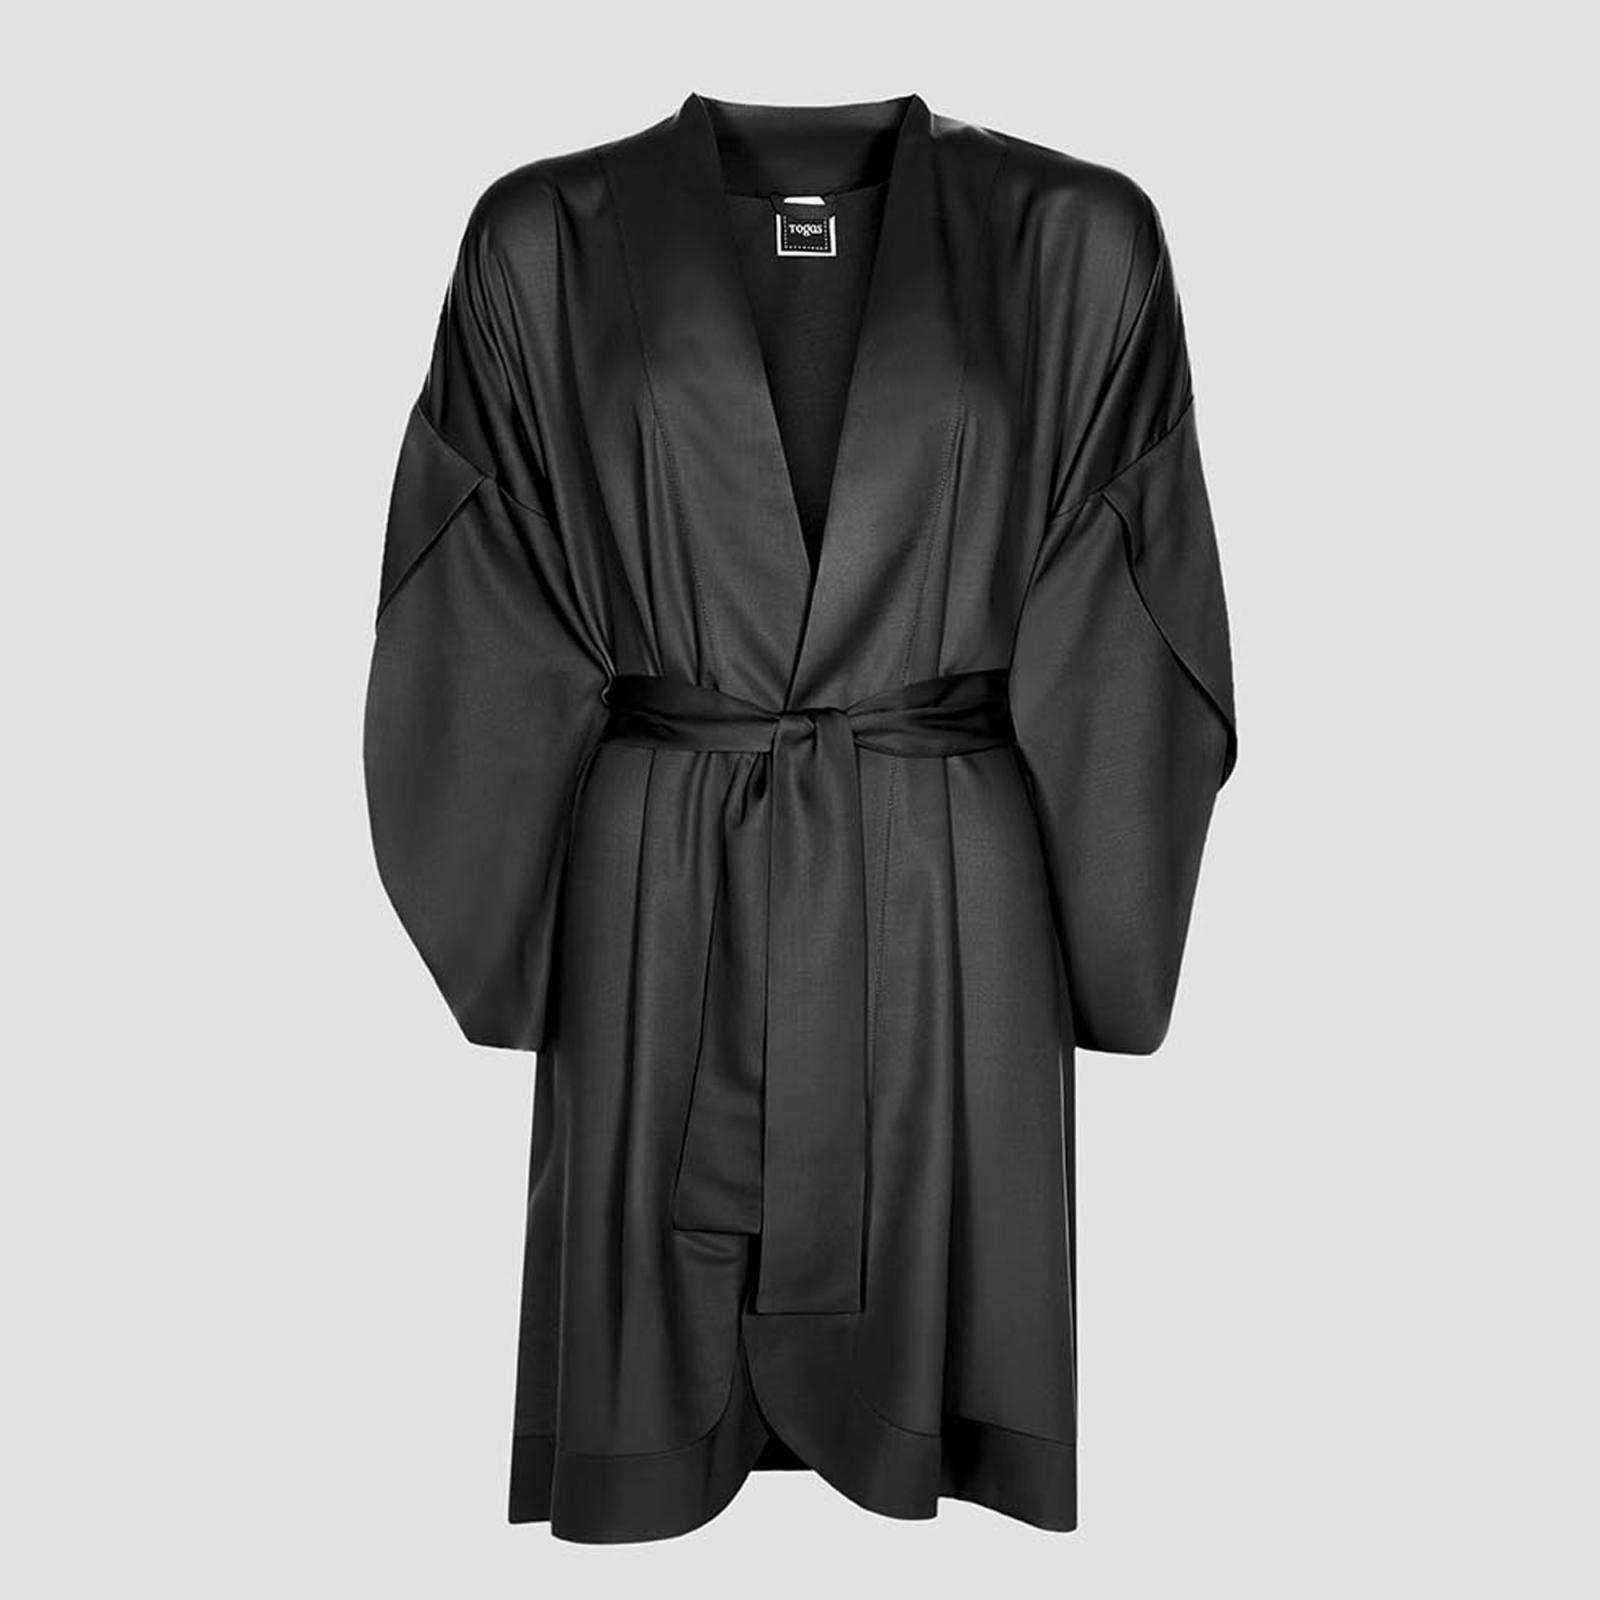 Халат-кимоно короткое Togas Наоми чёрное XXL (52) халат кимоно короткое togas наоми чёрное l 48